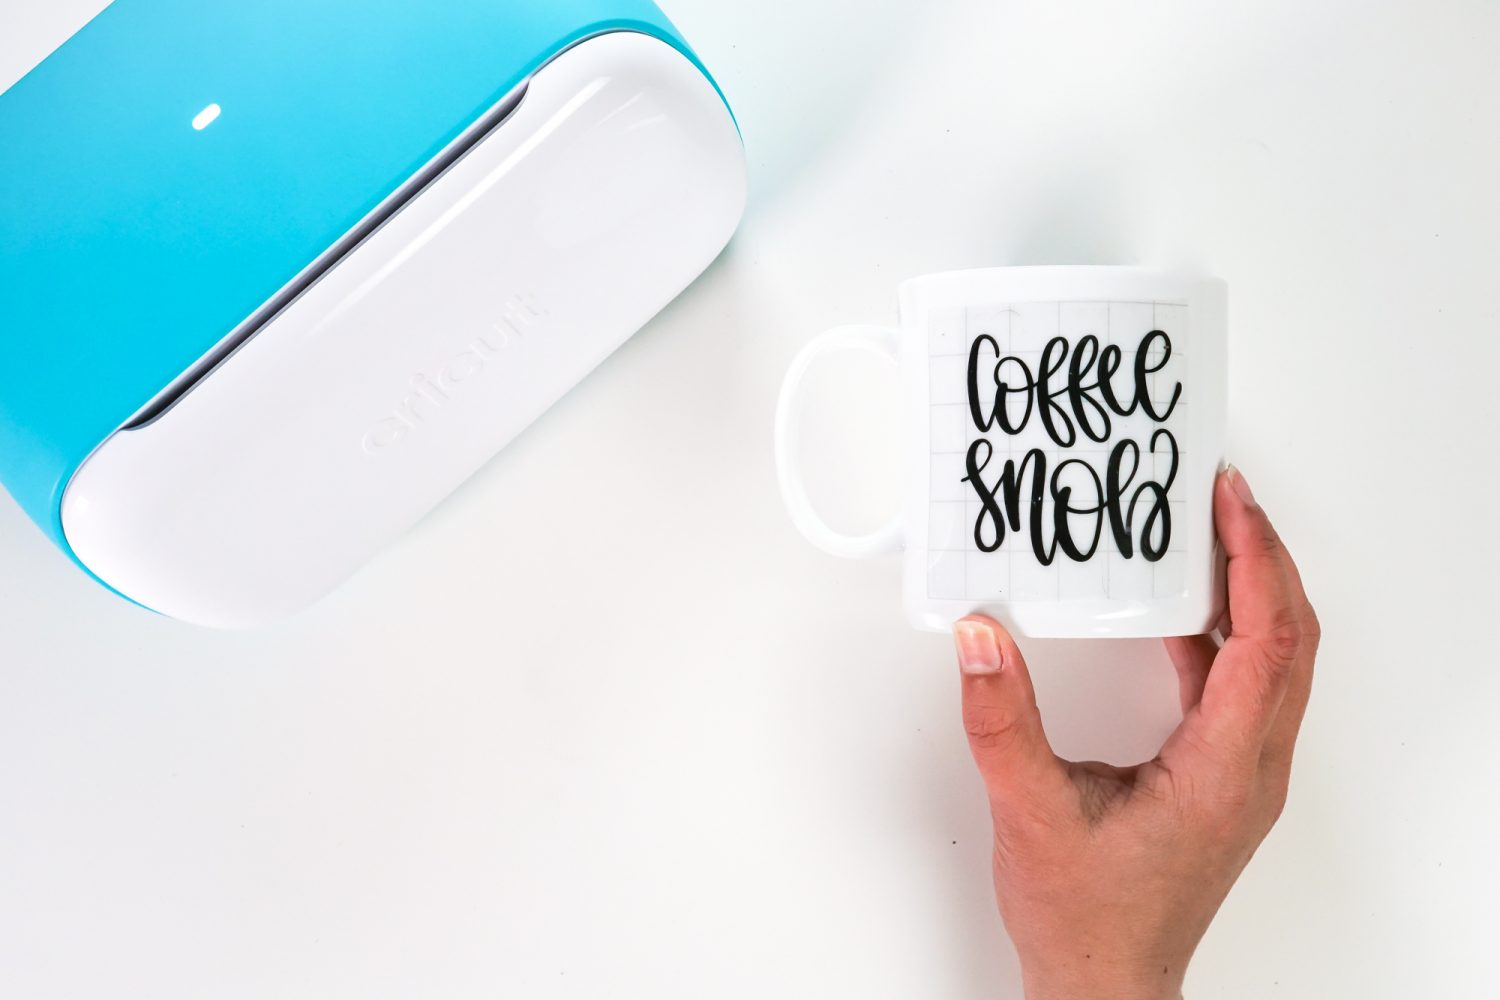 Coffee Snob decal on mug with transfer tape.